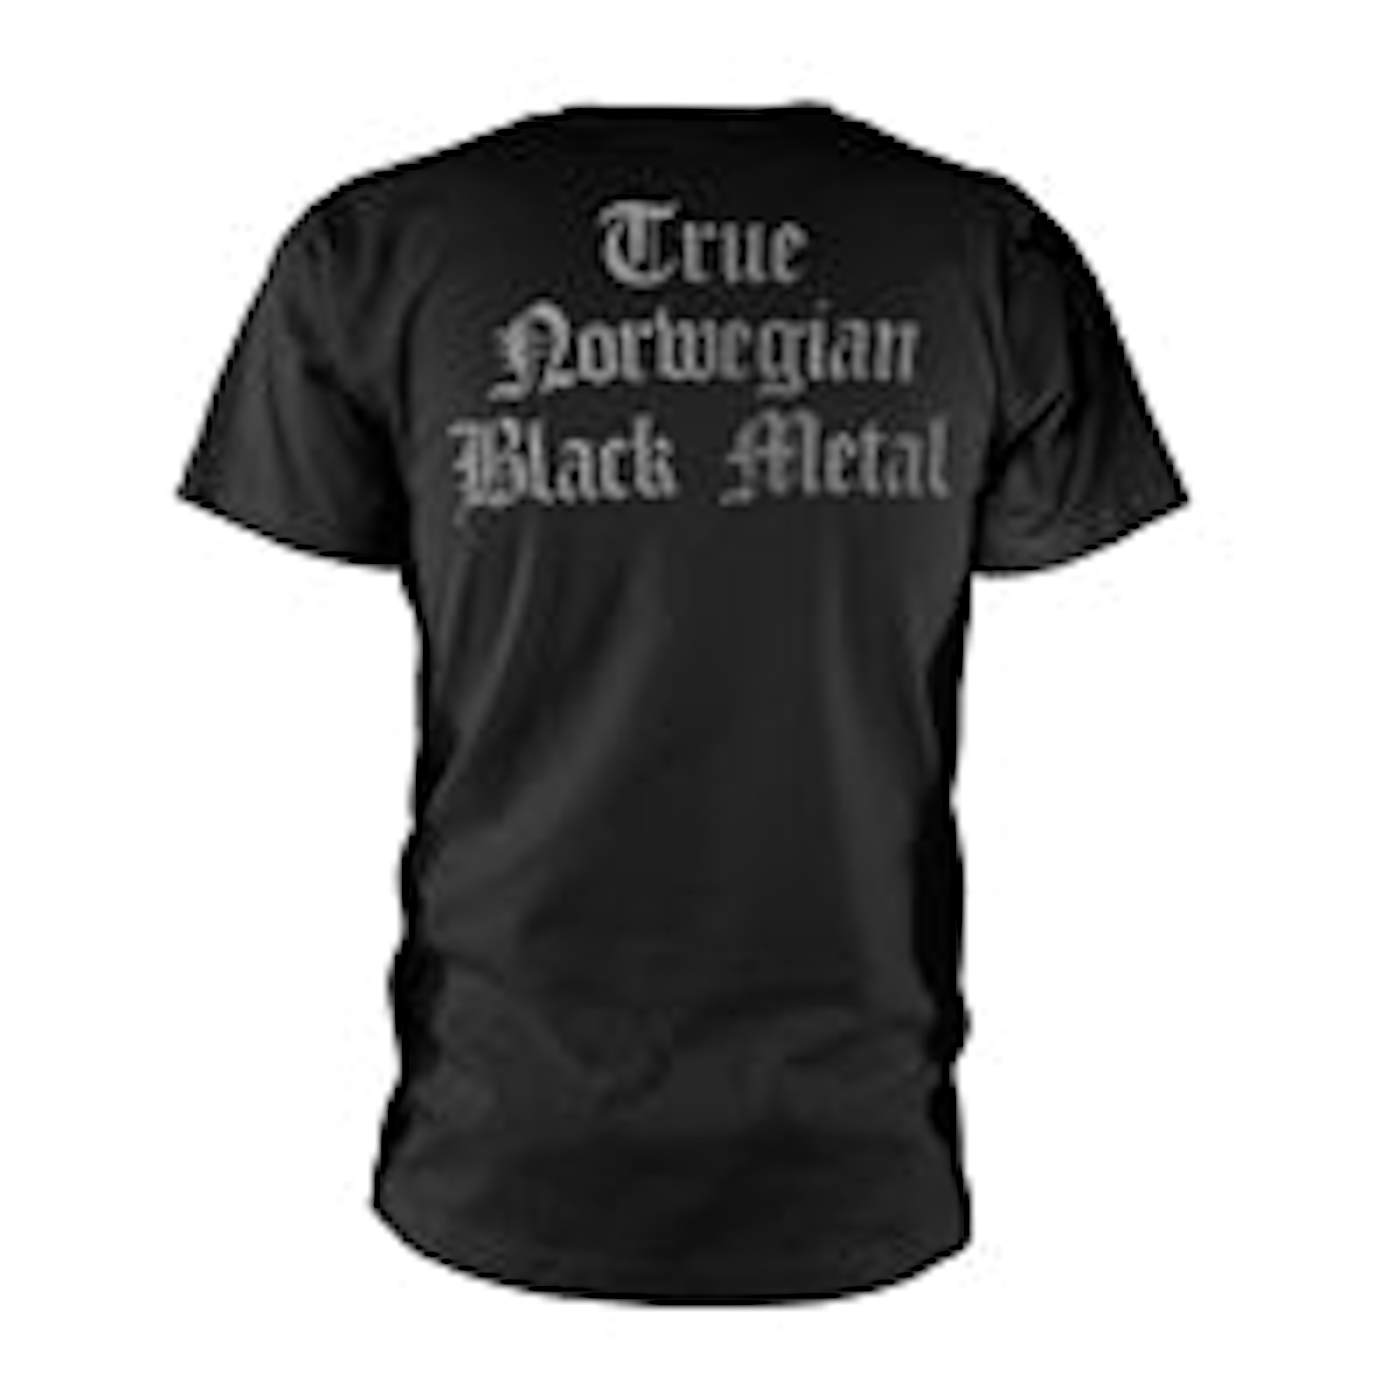 Darkthrone T Shirt - True Norwegian Black Metal